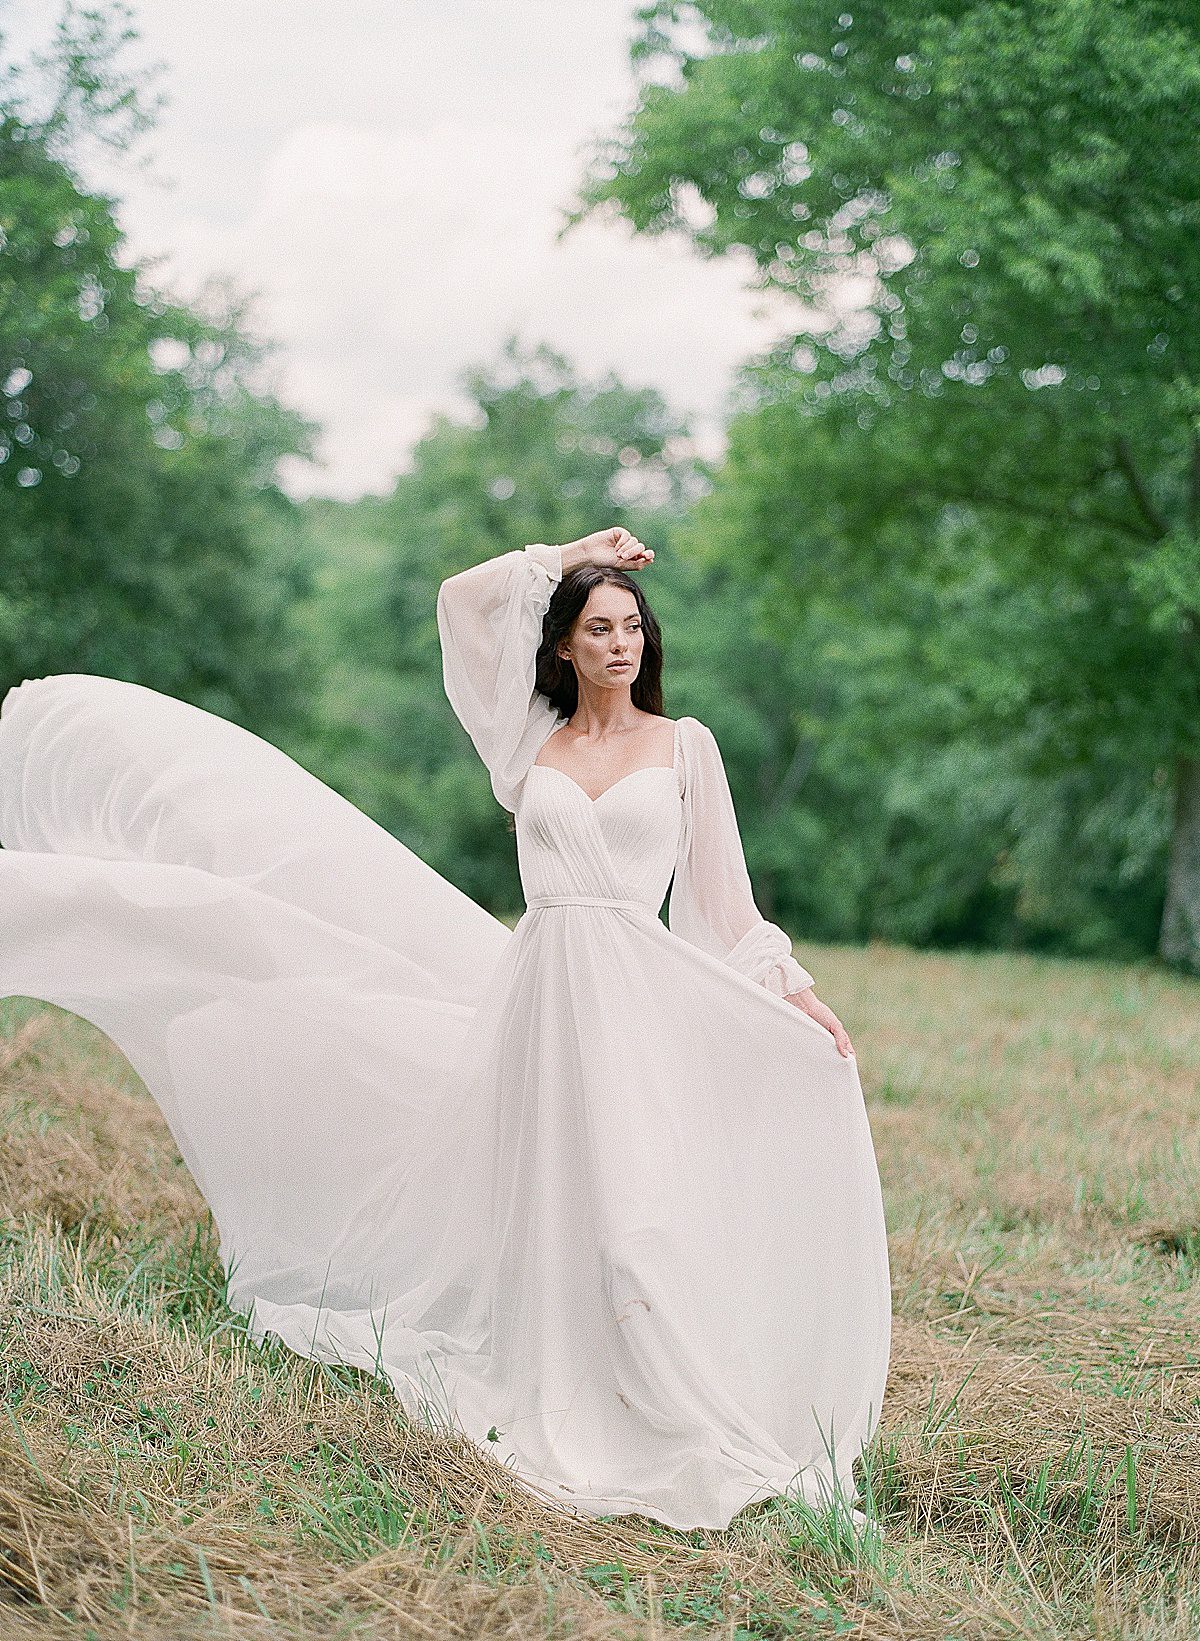 Bride Walking Through Field in Alon Livne White Gown Photo